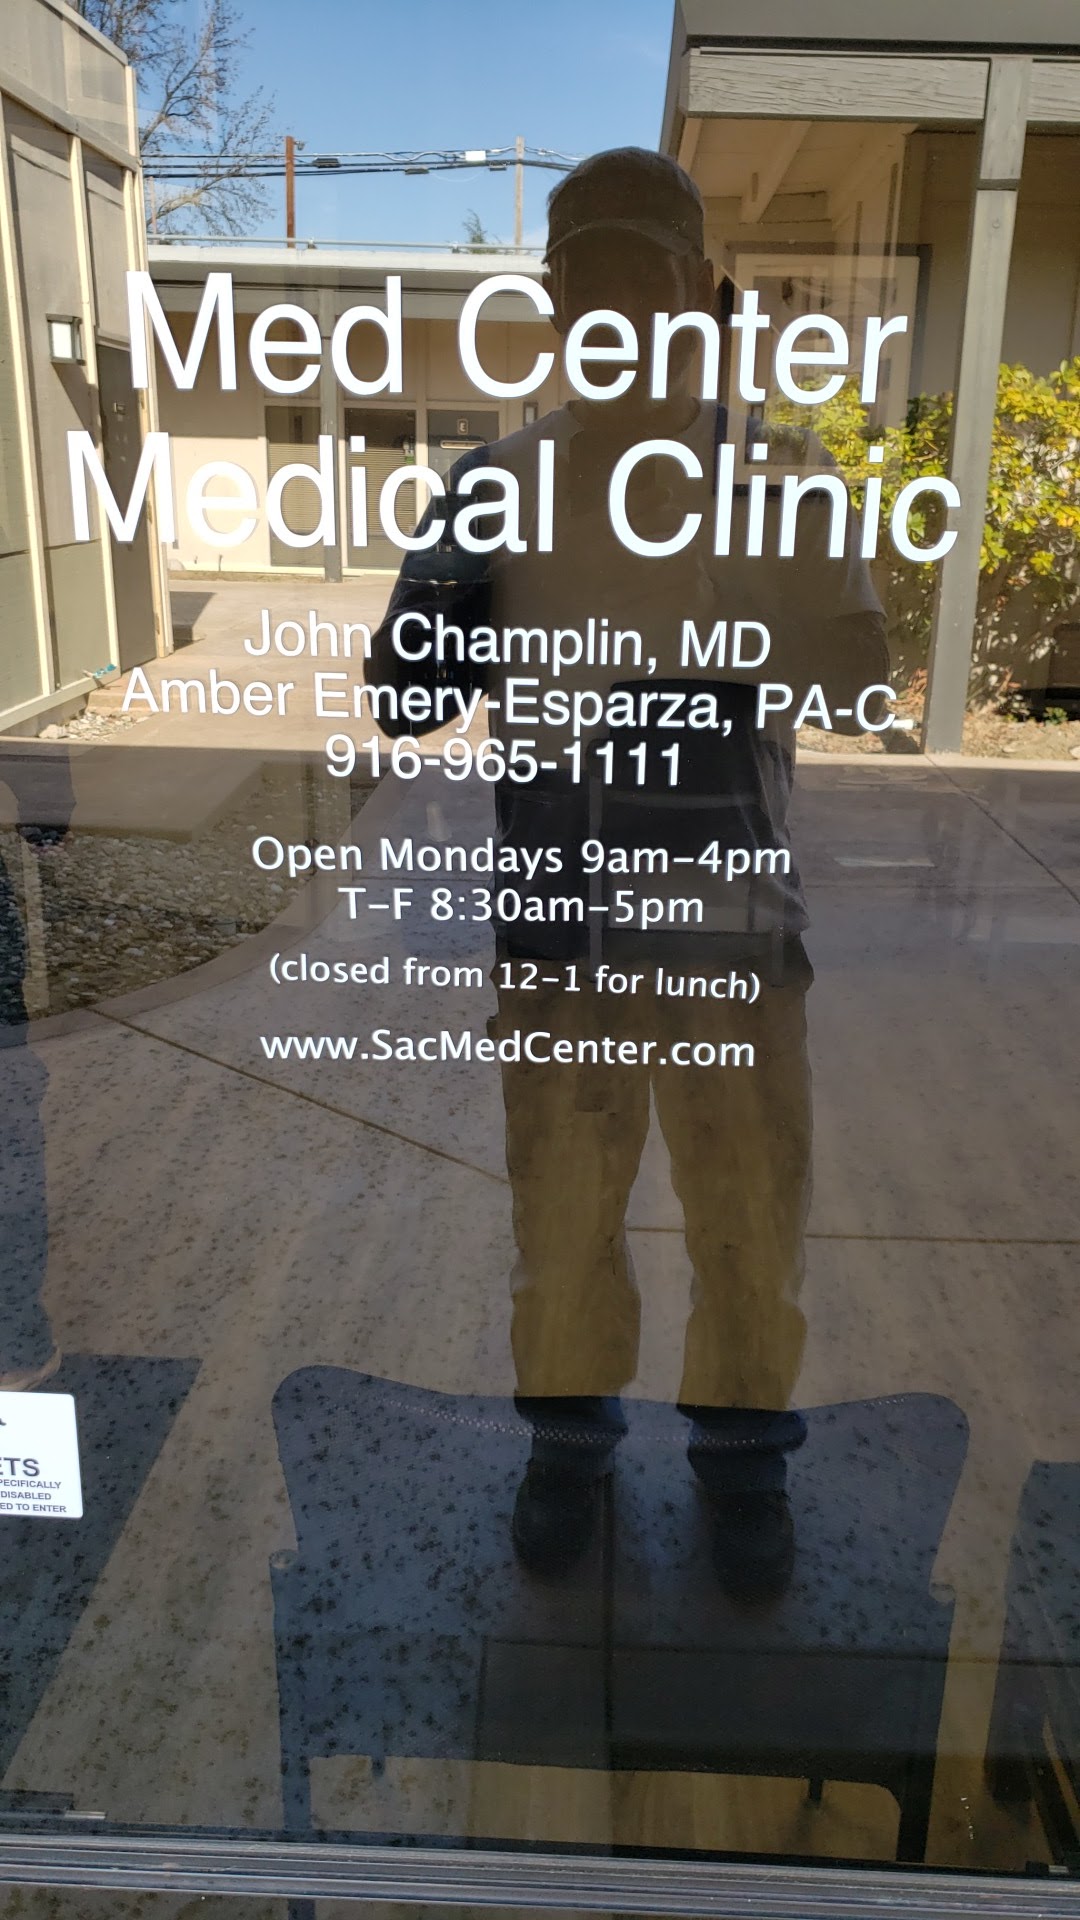 Med Center Medical Clinic